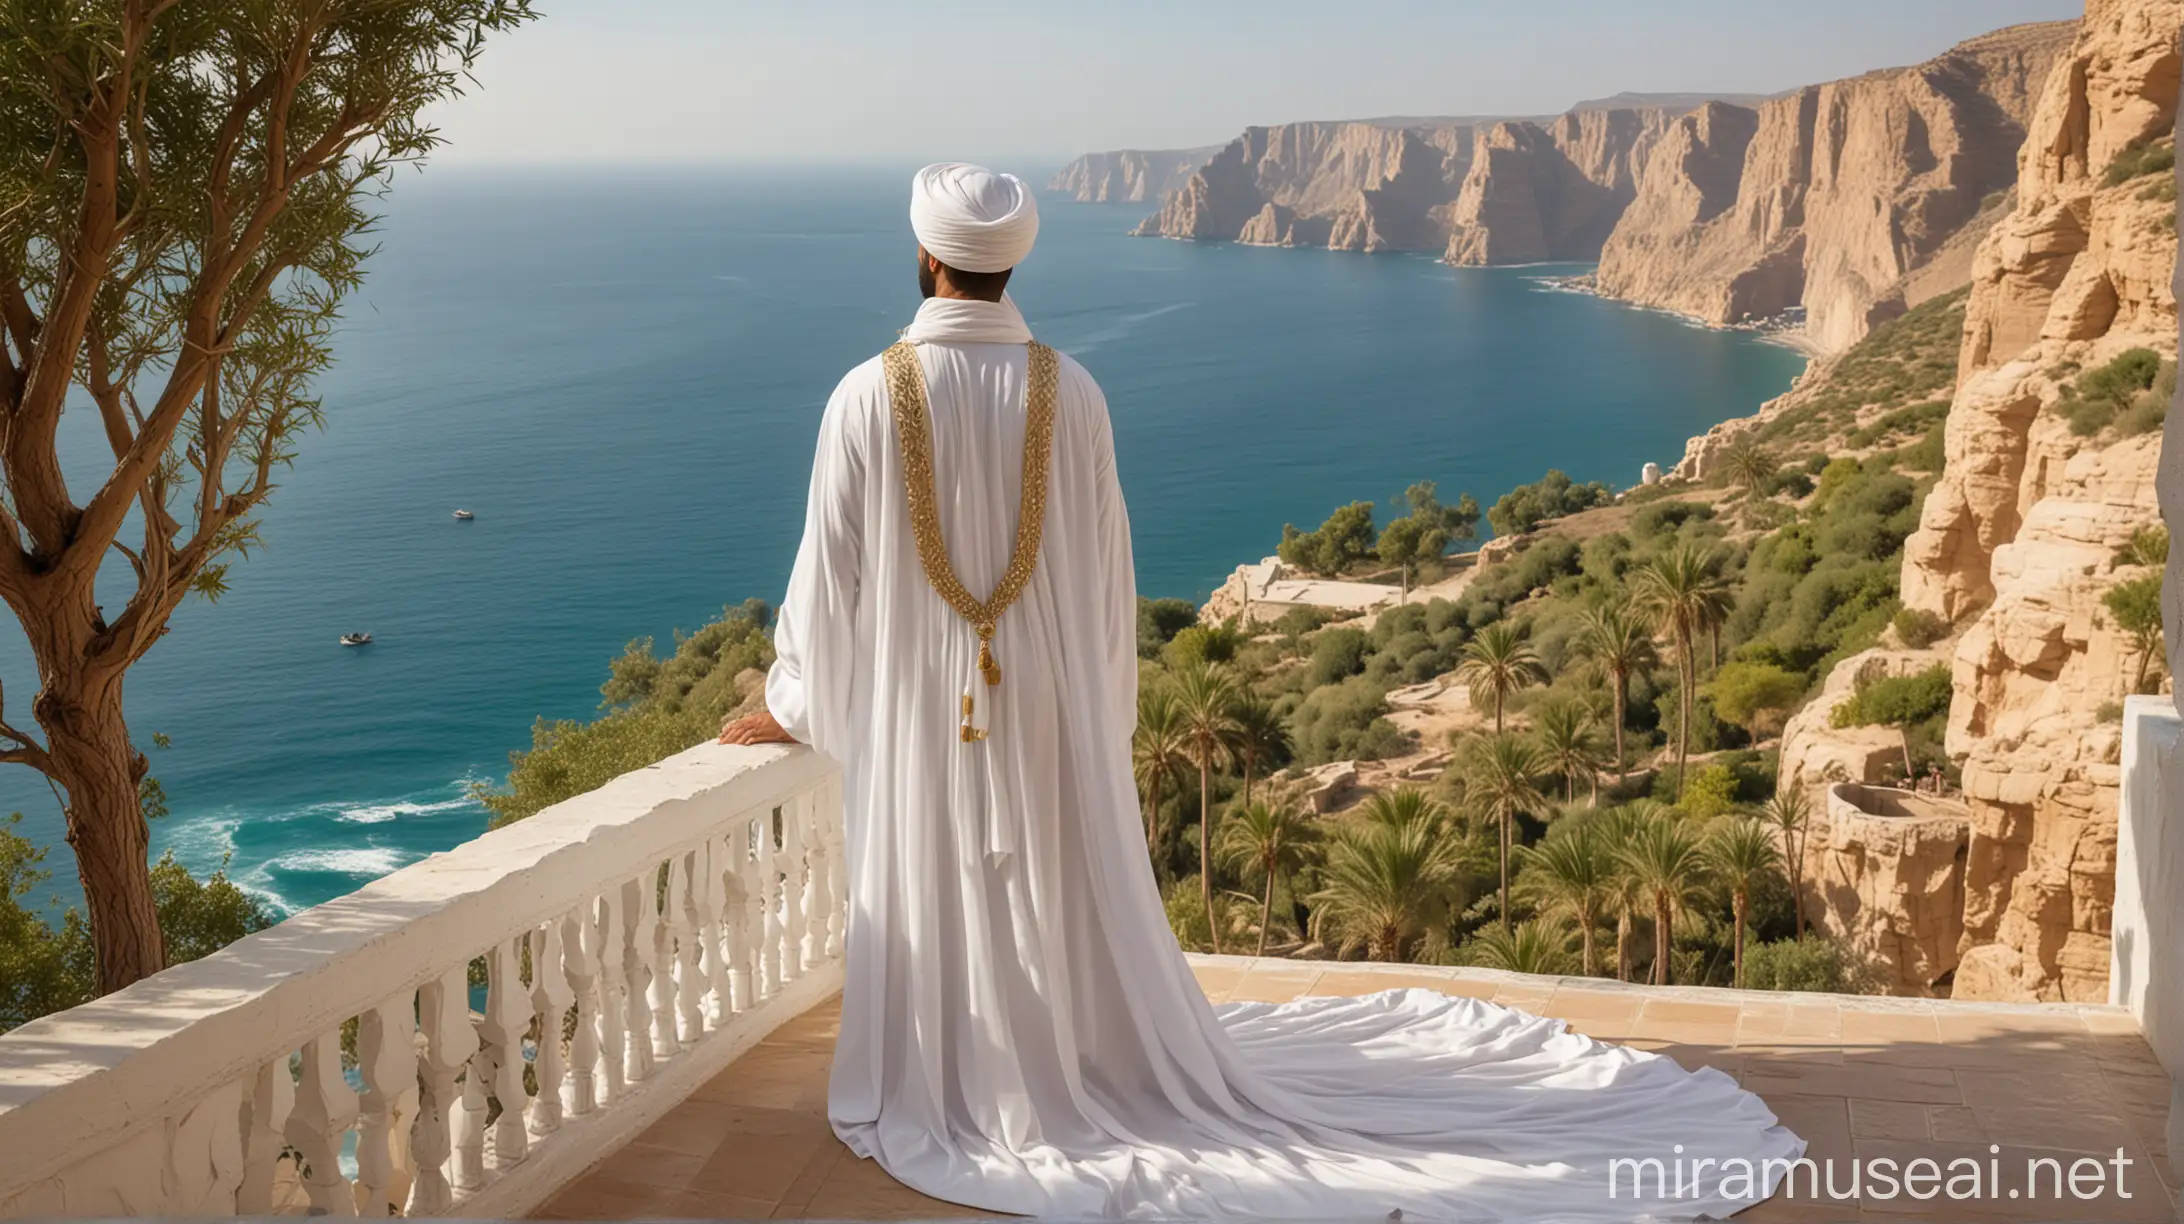 Arabian Man Admiring Coastal Cliff View in Traditional Attire